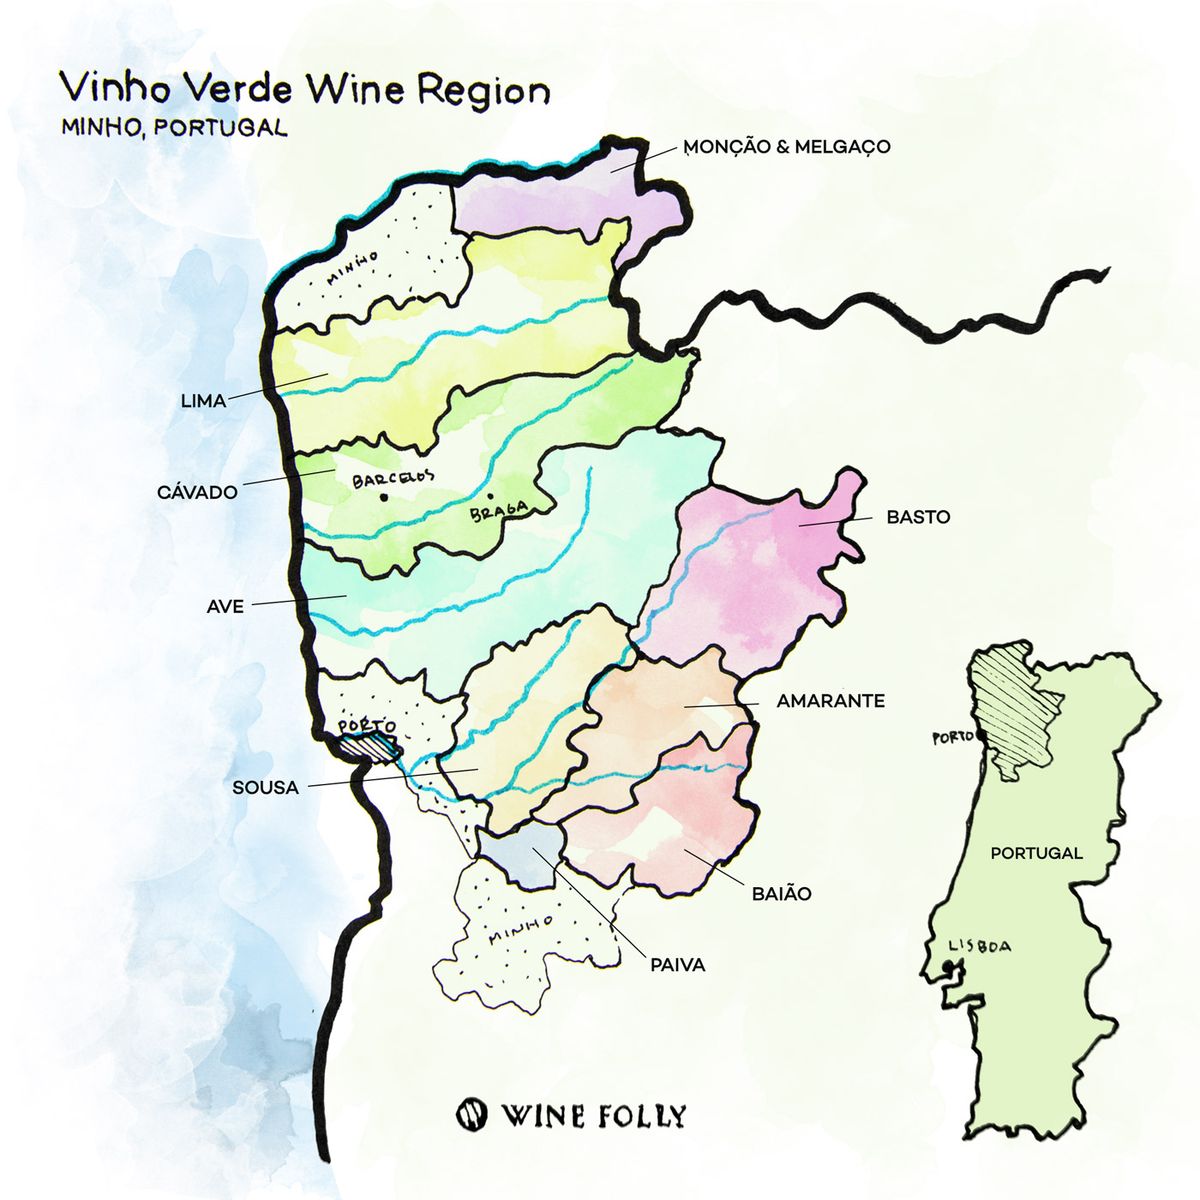 Vinho-Verde-Region-Minino-Portugal-WineFolly